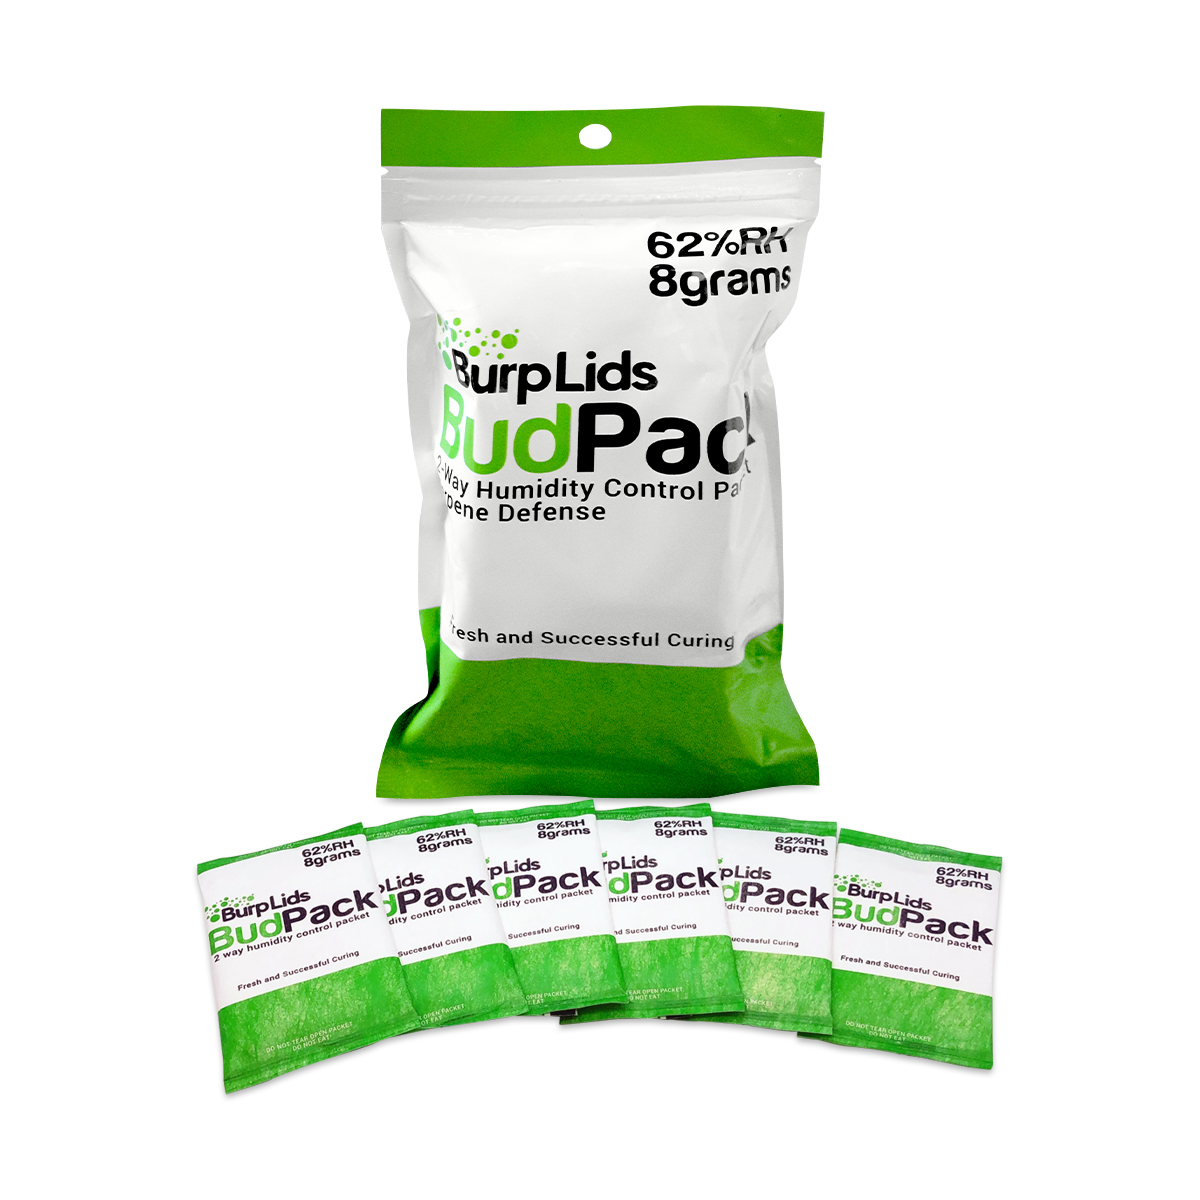 Burp Lids Bud Pack 62 RH Humidity Packets